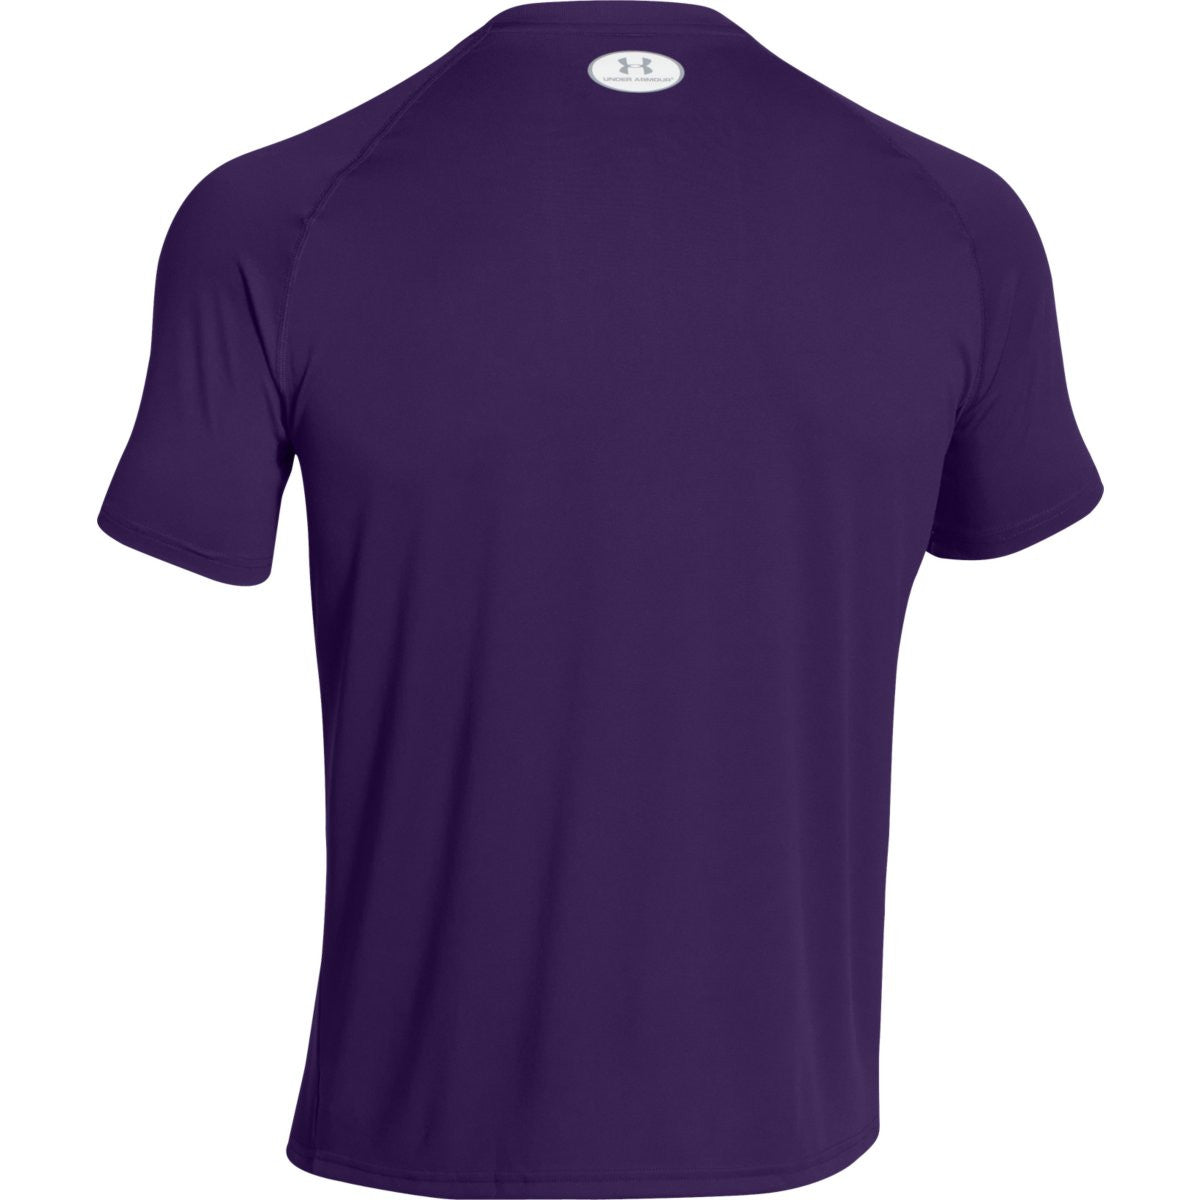 Under Armour S T-shirt Purple Xs